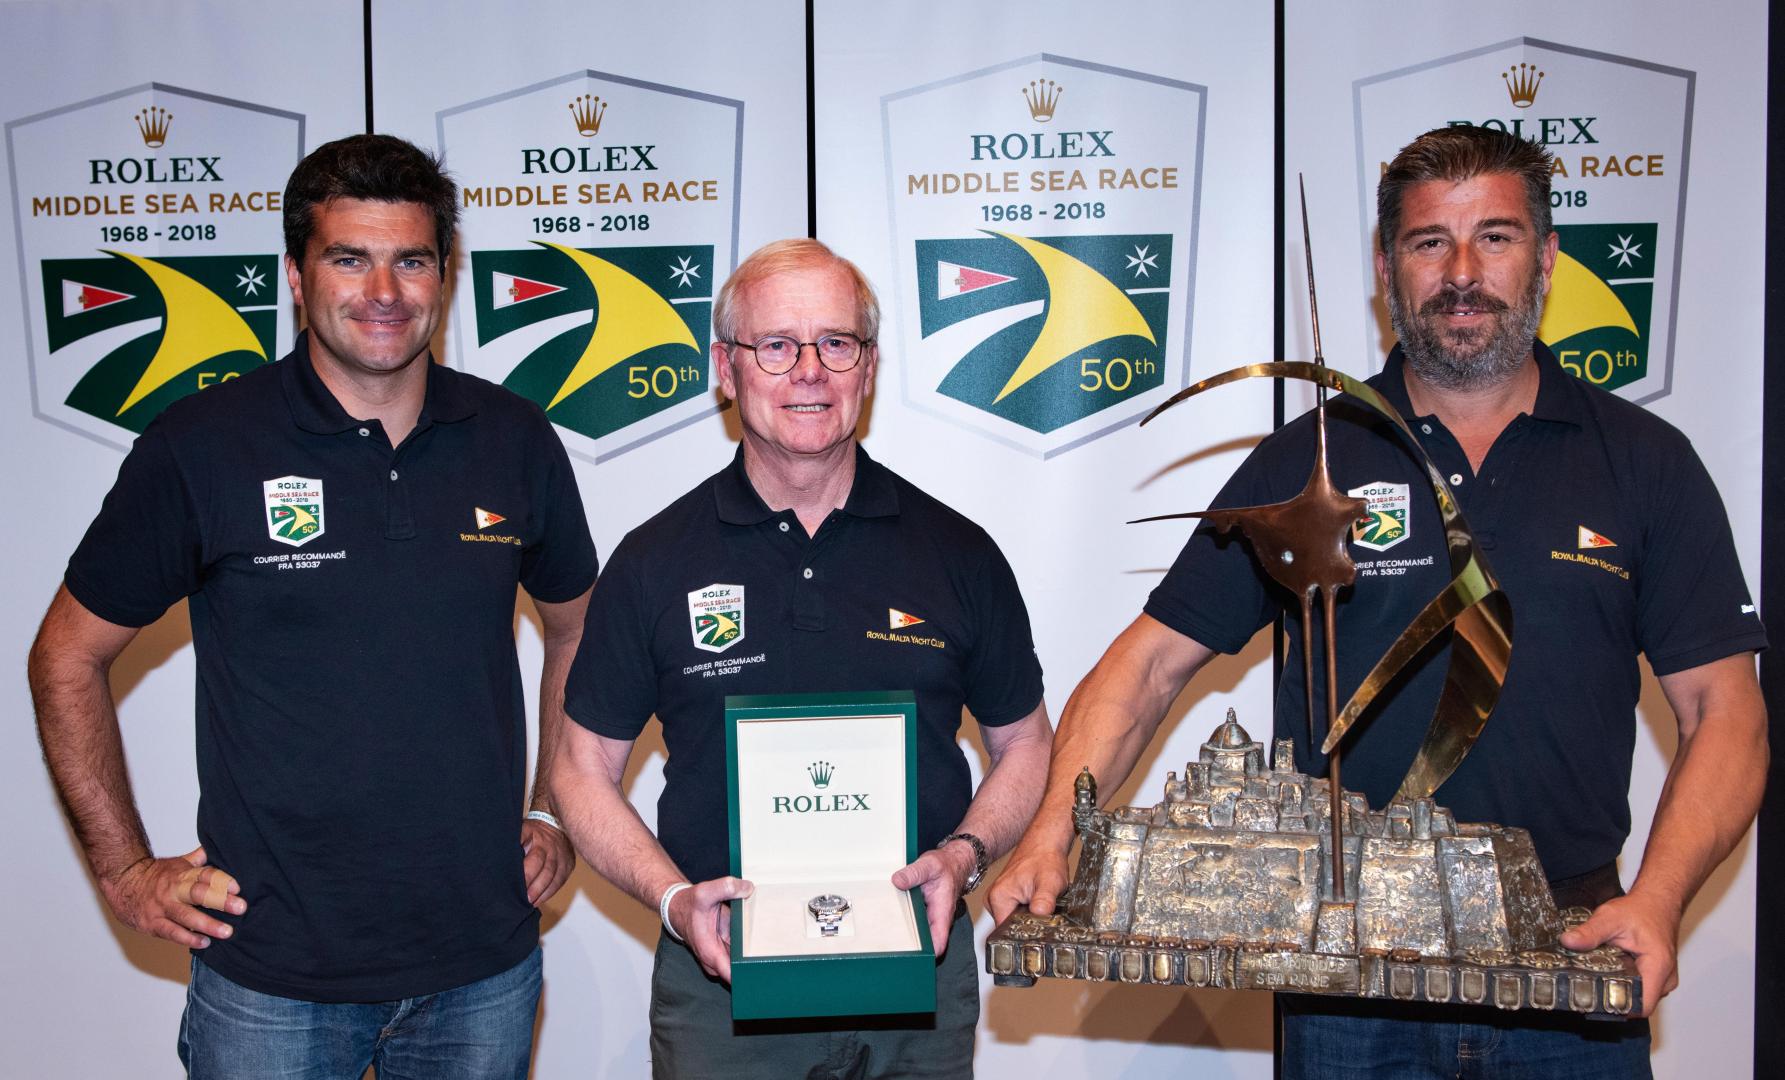 Courrier Recommandé winners of the 2018 Rolex Middle Sea Race